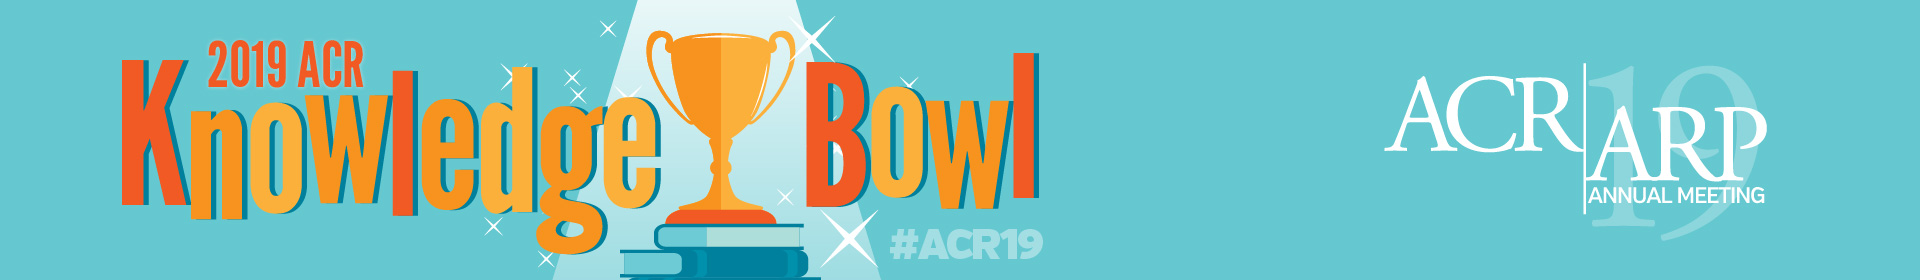 2019 ACR Knowledge Bowl